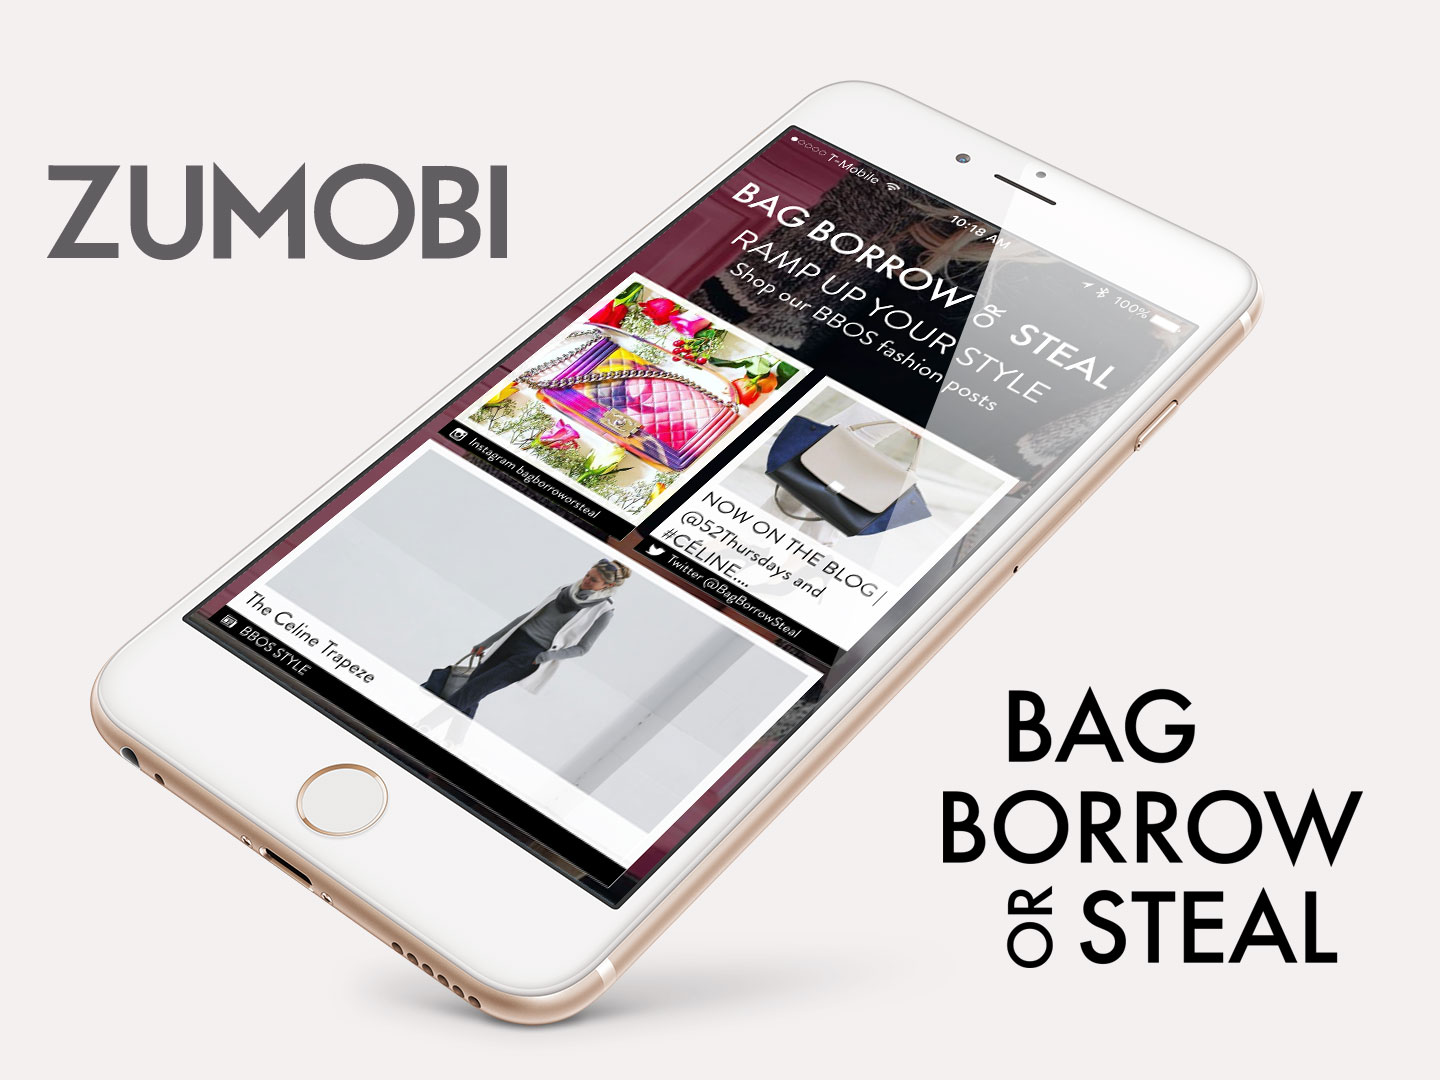 Zumobi Creates Mobile Microzines for Shoppable Retail Experience